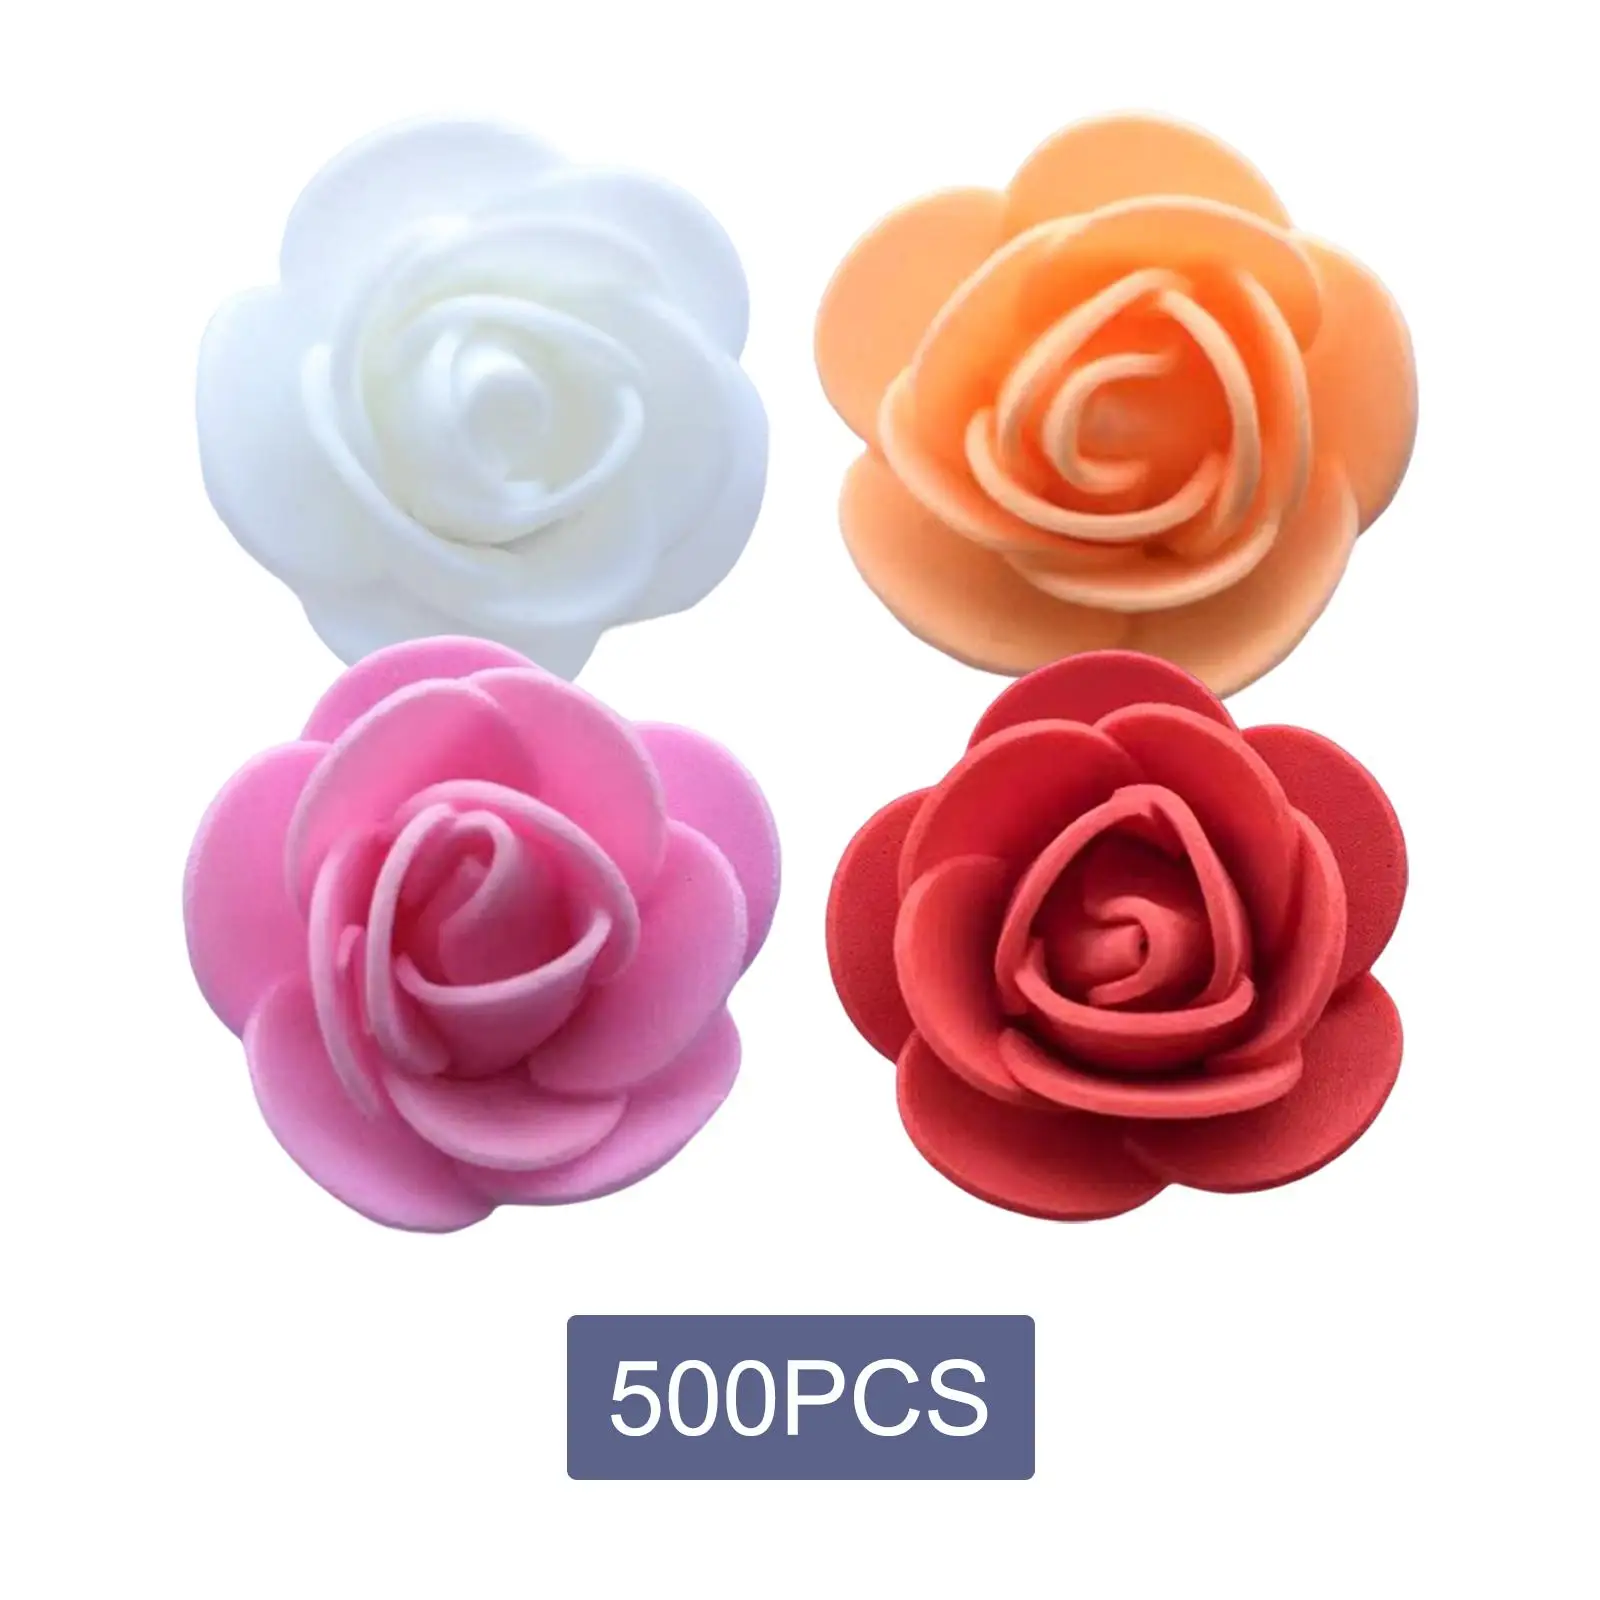 500 Pieces Mini Artificial Rose Heads Flower Arrangement for Table Home